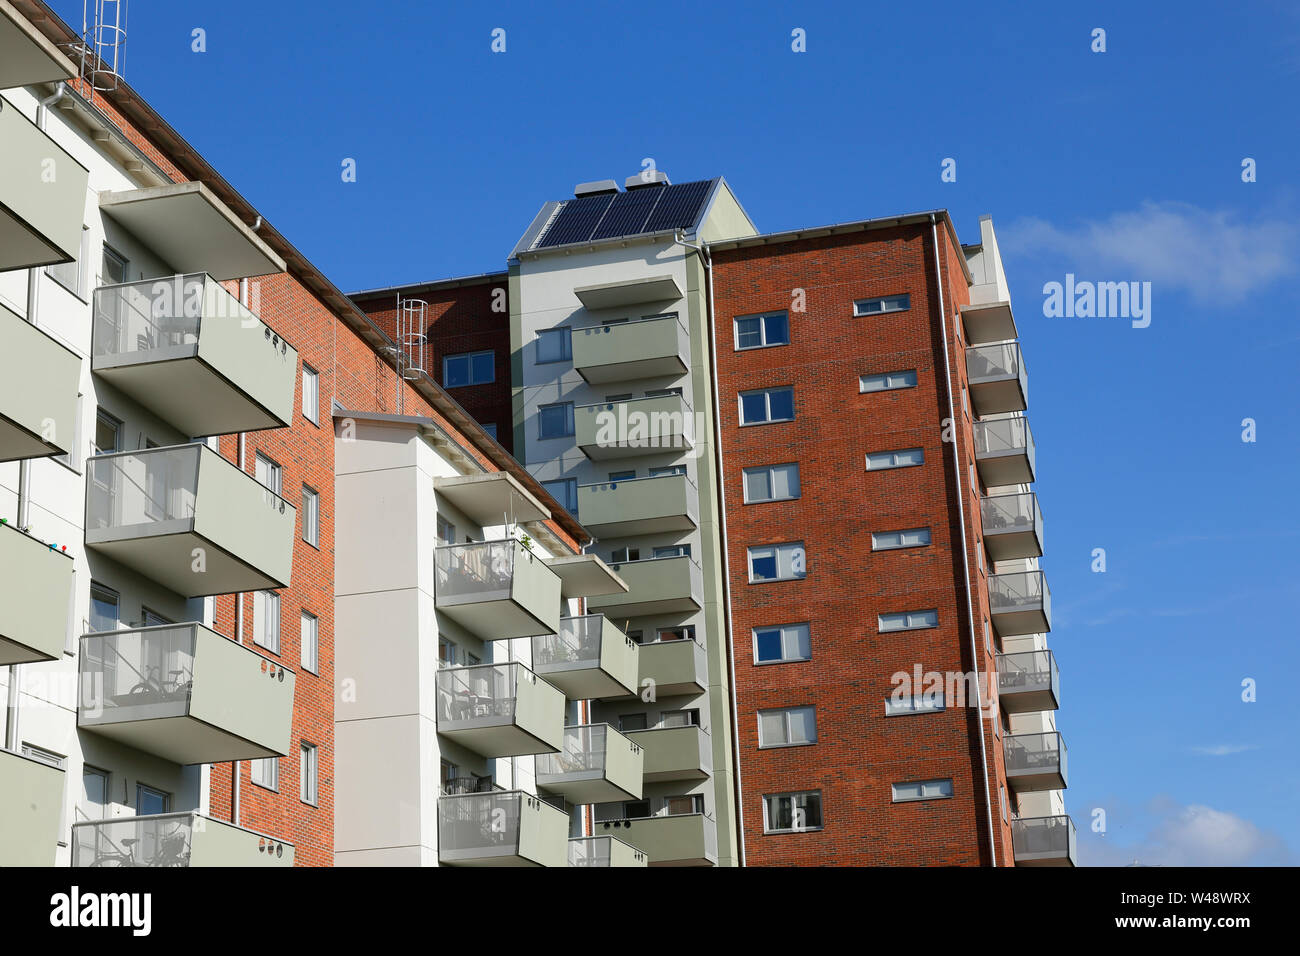 Sodertalje, Sweden - June 27, 2019: Multi-storey residential apartment buildings. Stock Photo